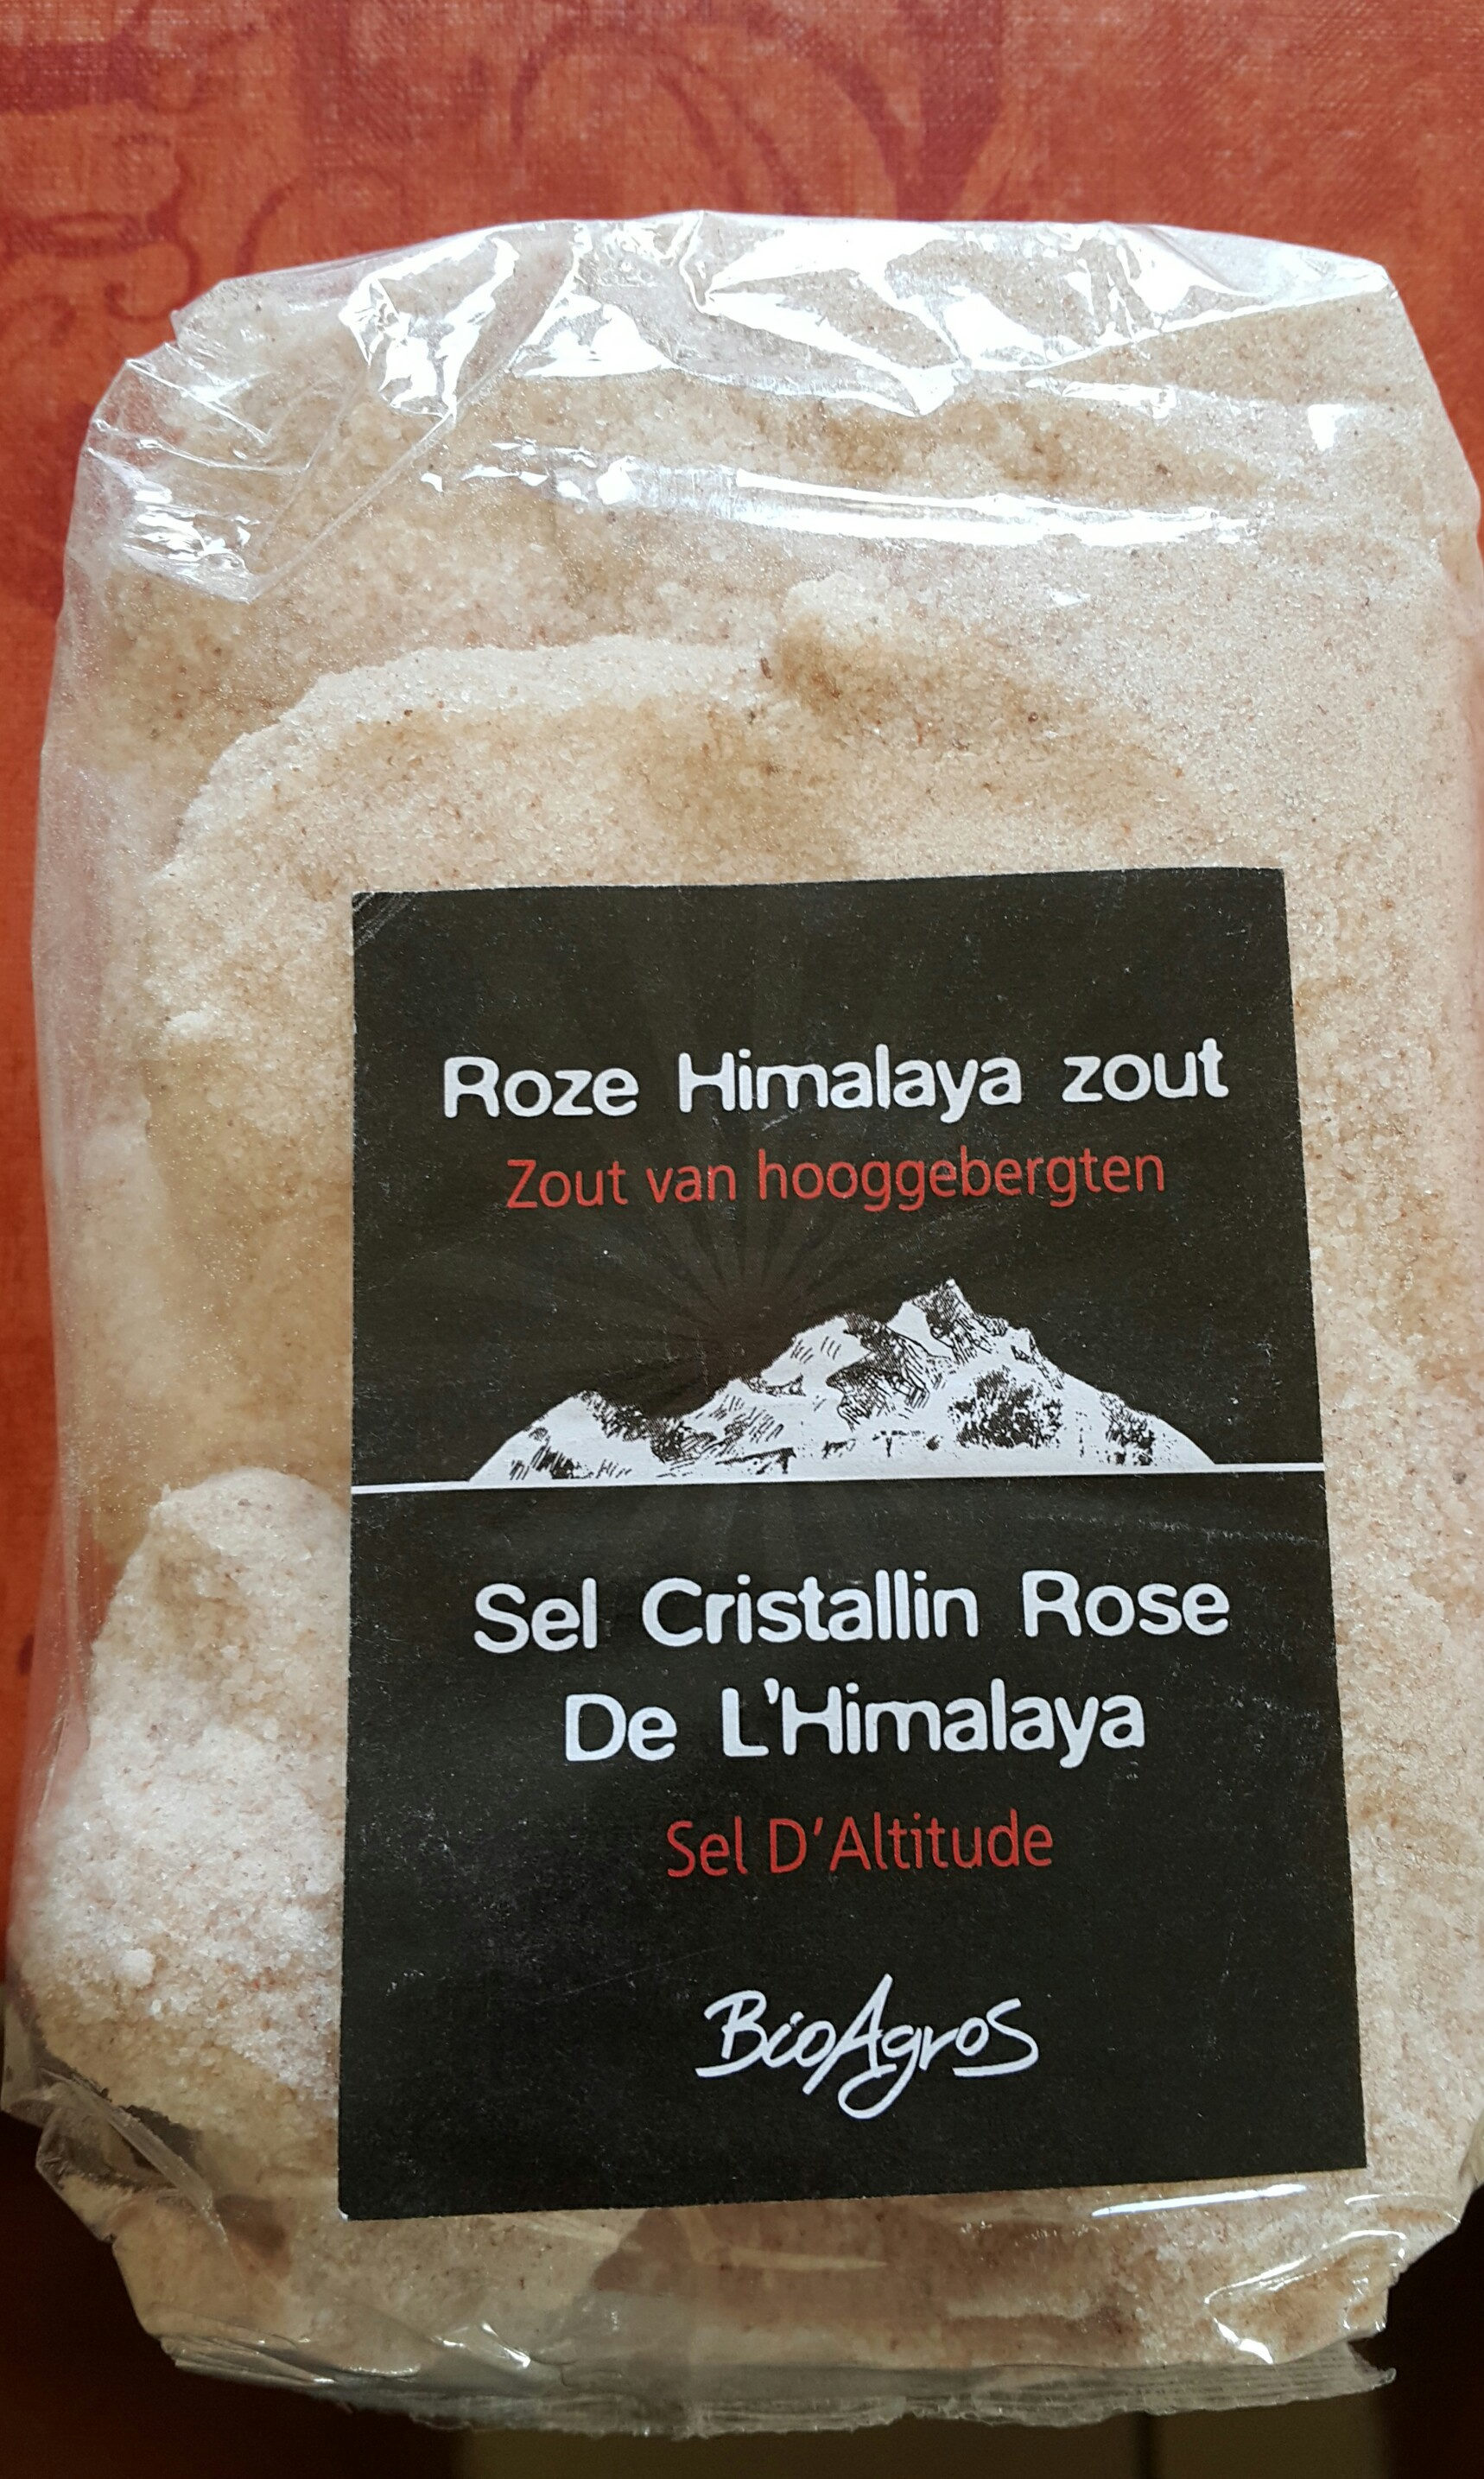 sel cristallin rose de l'Himalaya - Product - fr